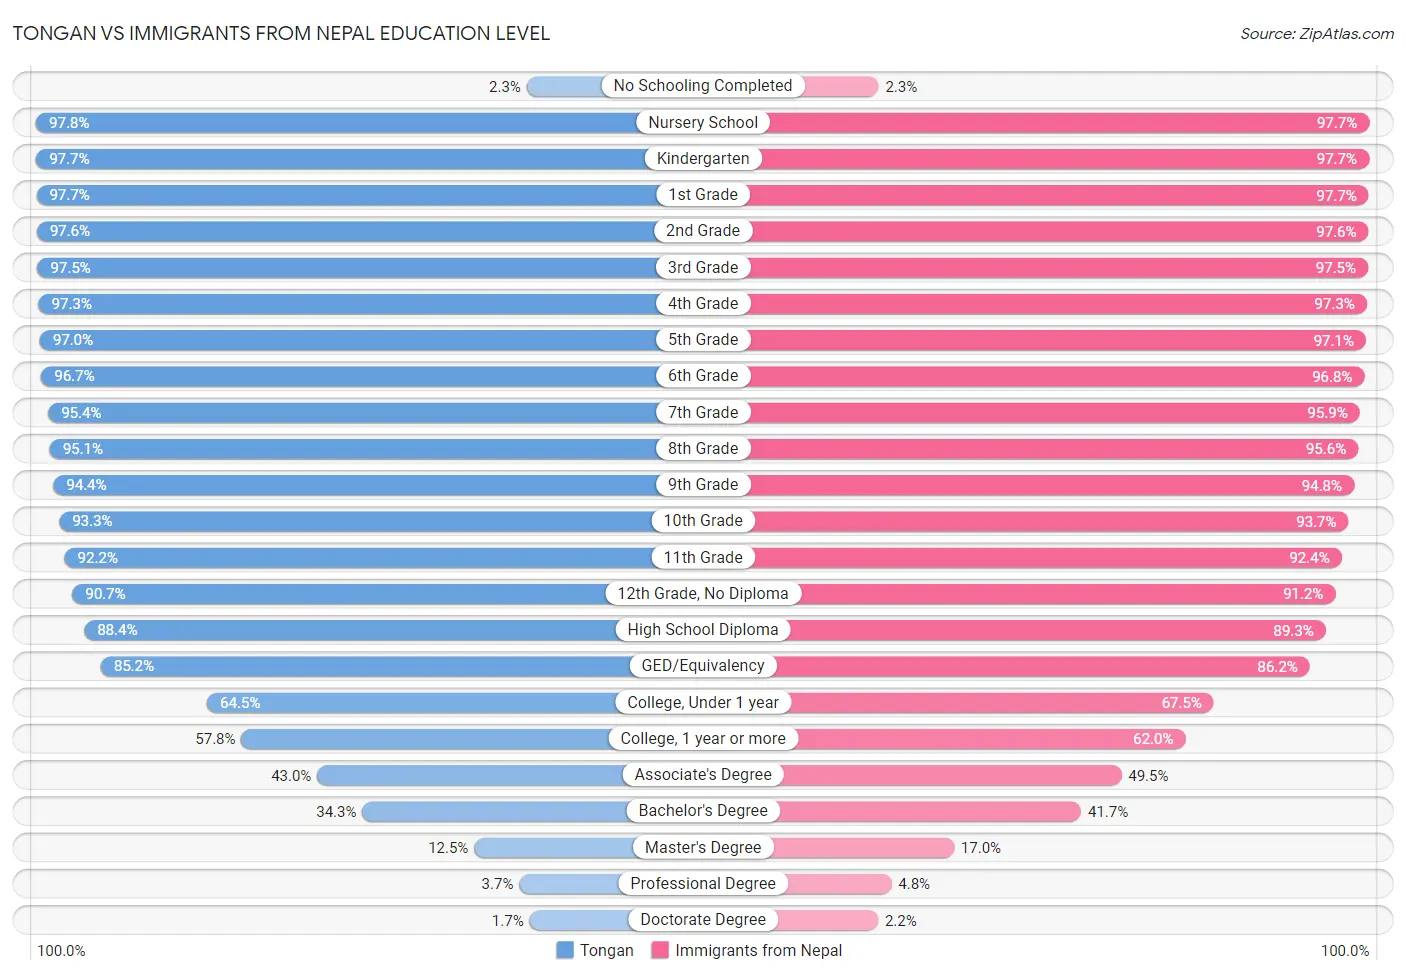 Tongan vs Immigrants from Nepal Education Level